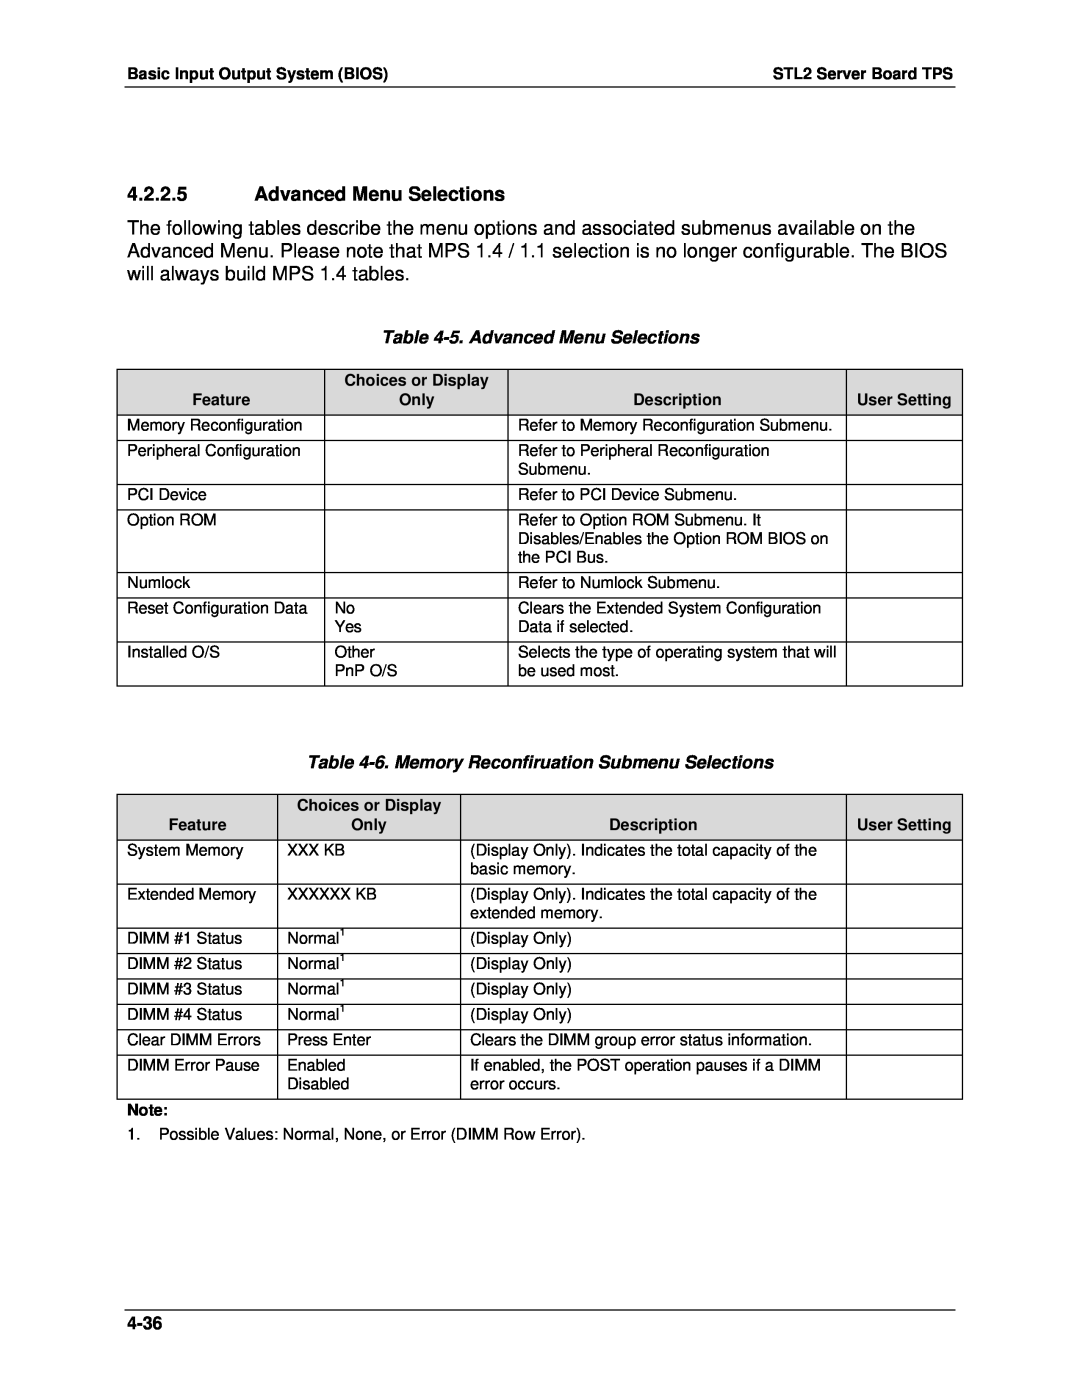 Intel STL2 manual 4.2.2.5Advanced Menu Selections, 5.Advanced Menu Selections, 4-36 